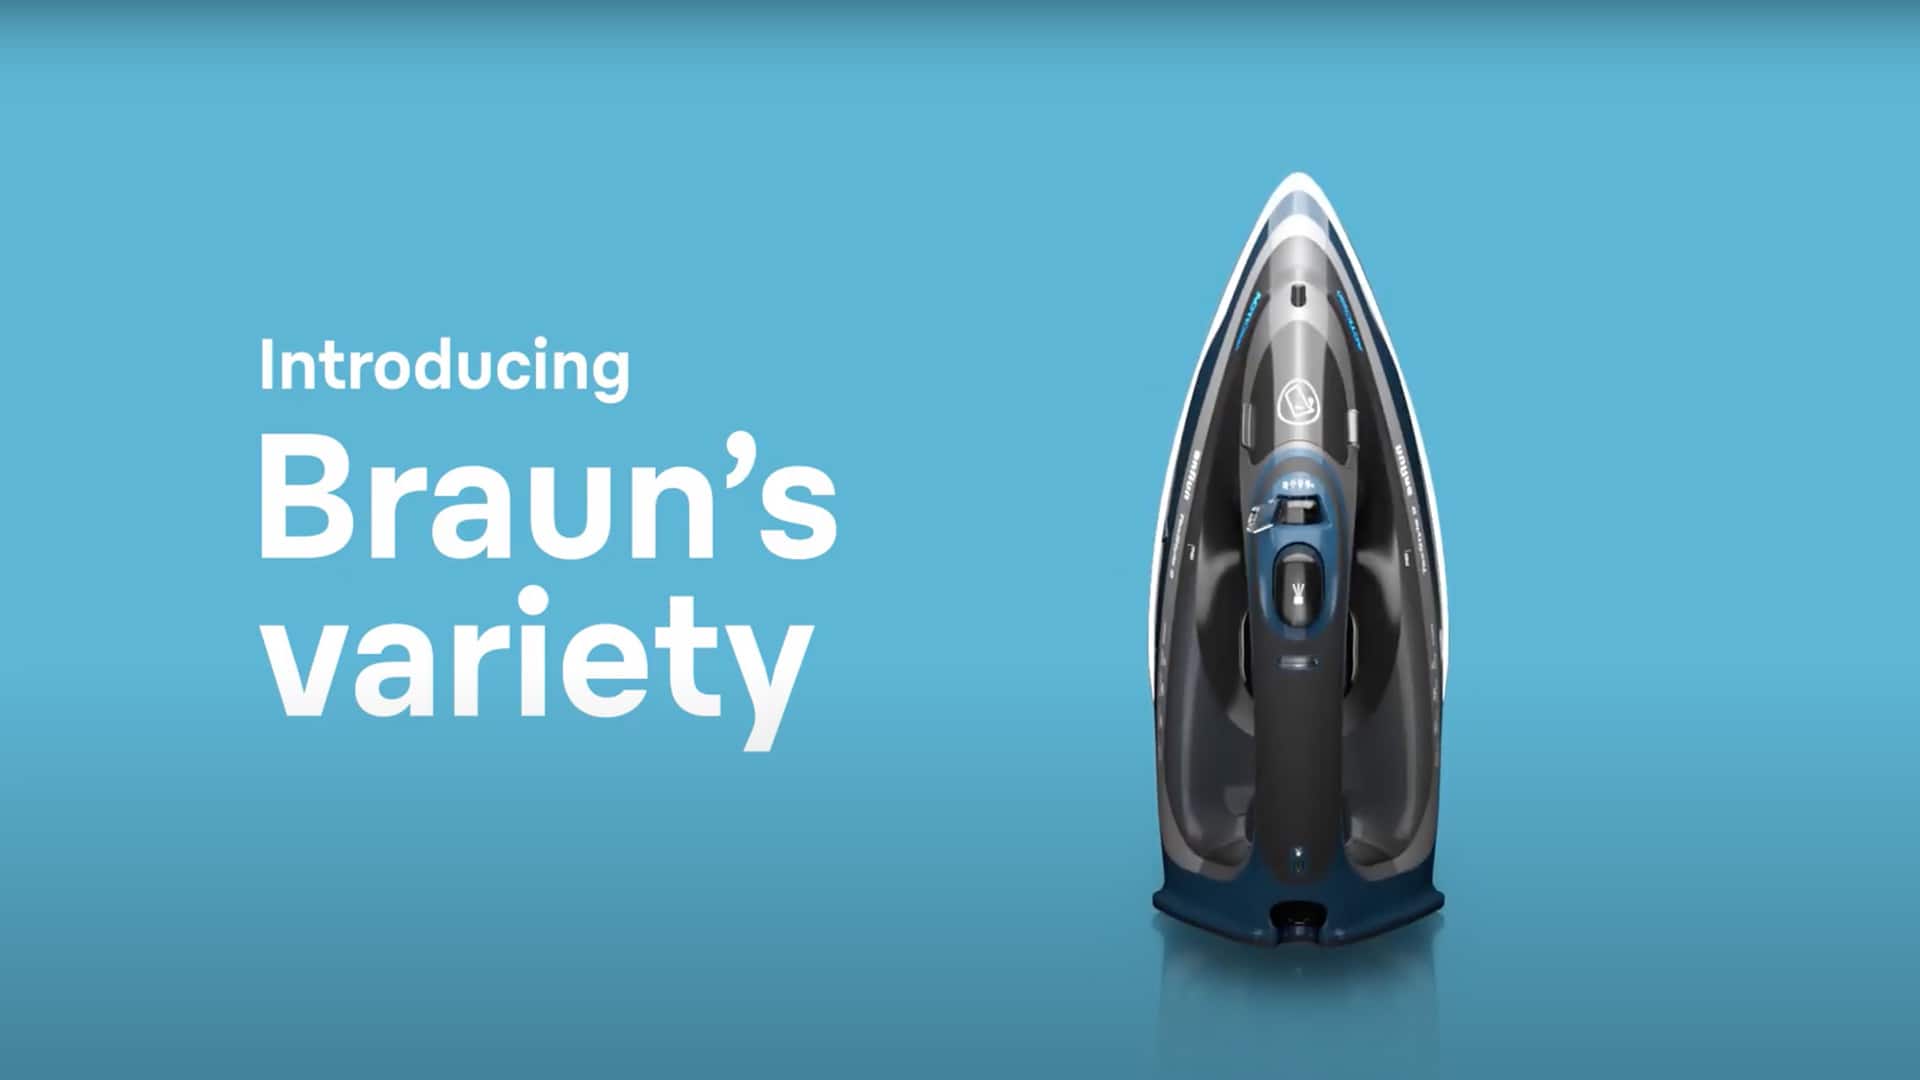 Introducing Braun's Steam iron range - Braun's variety